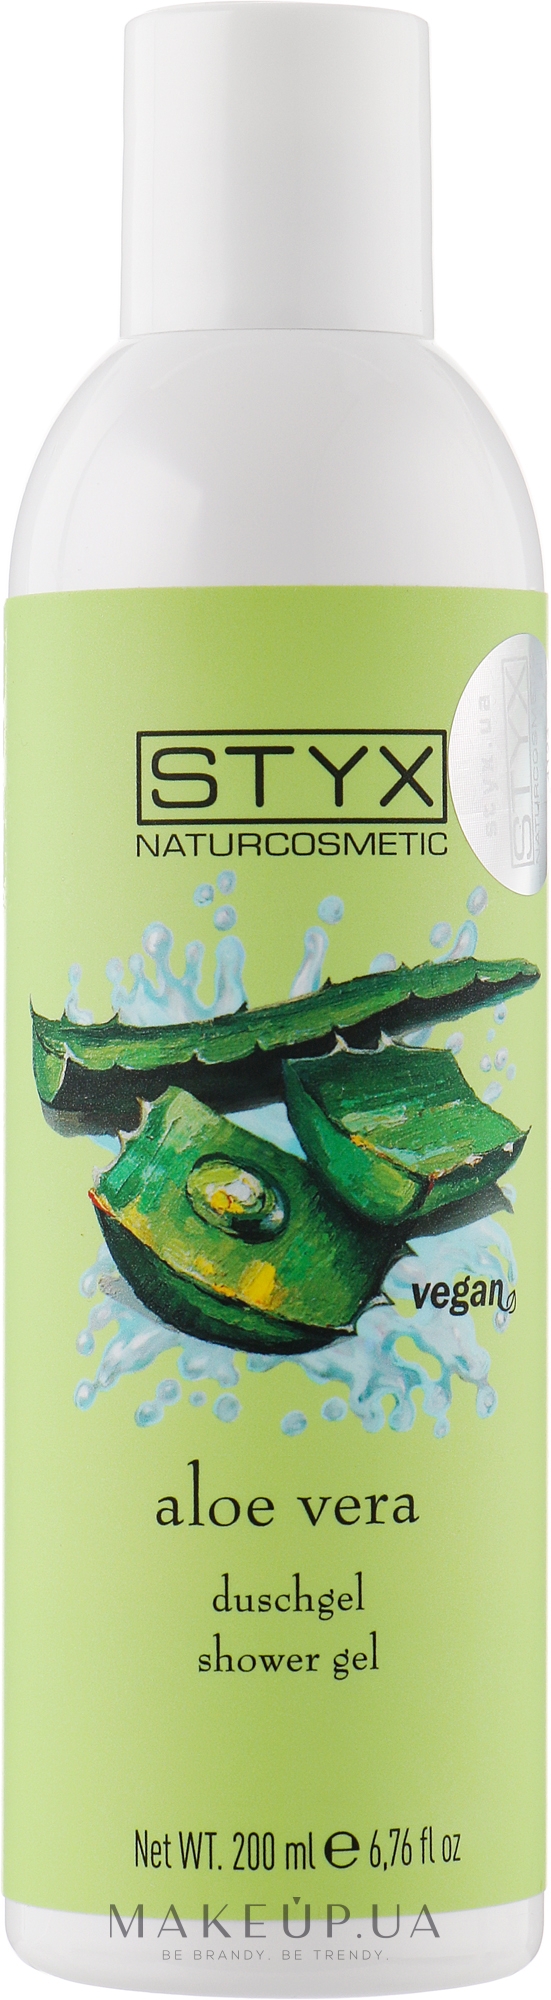 Косметика Styx Naturcosmetic (Австрия). Австрийская косметика Стикс.